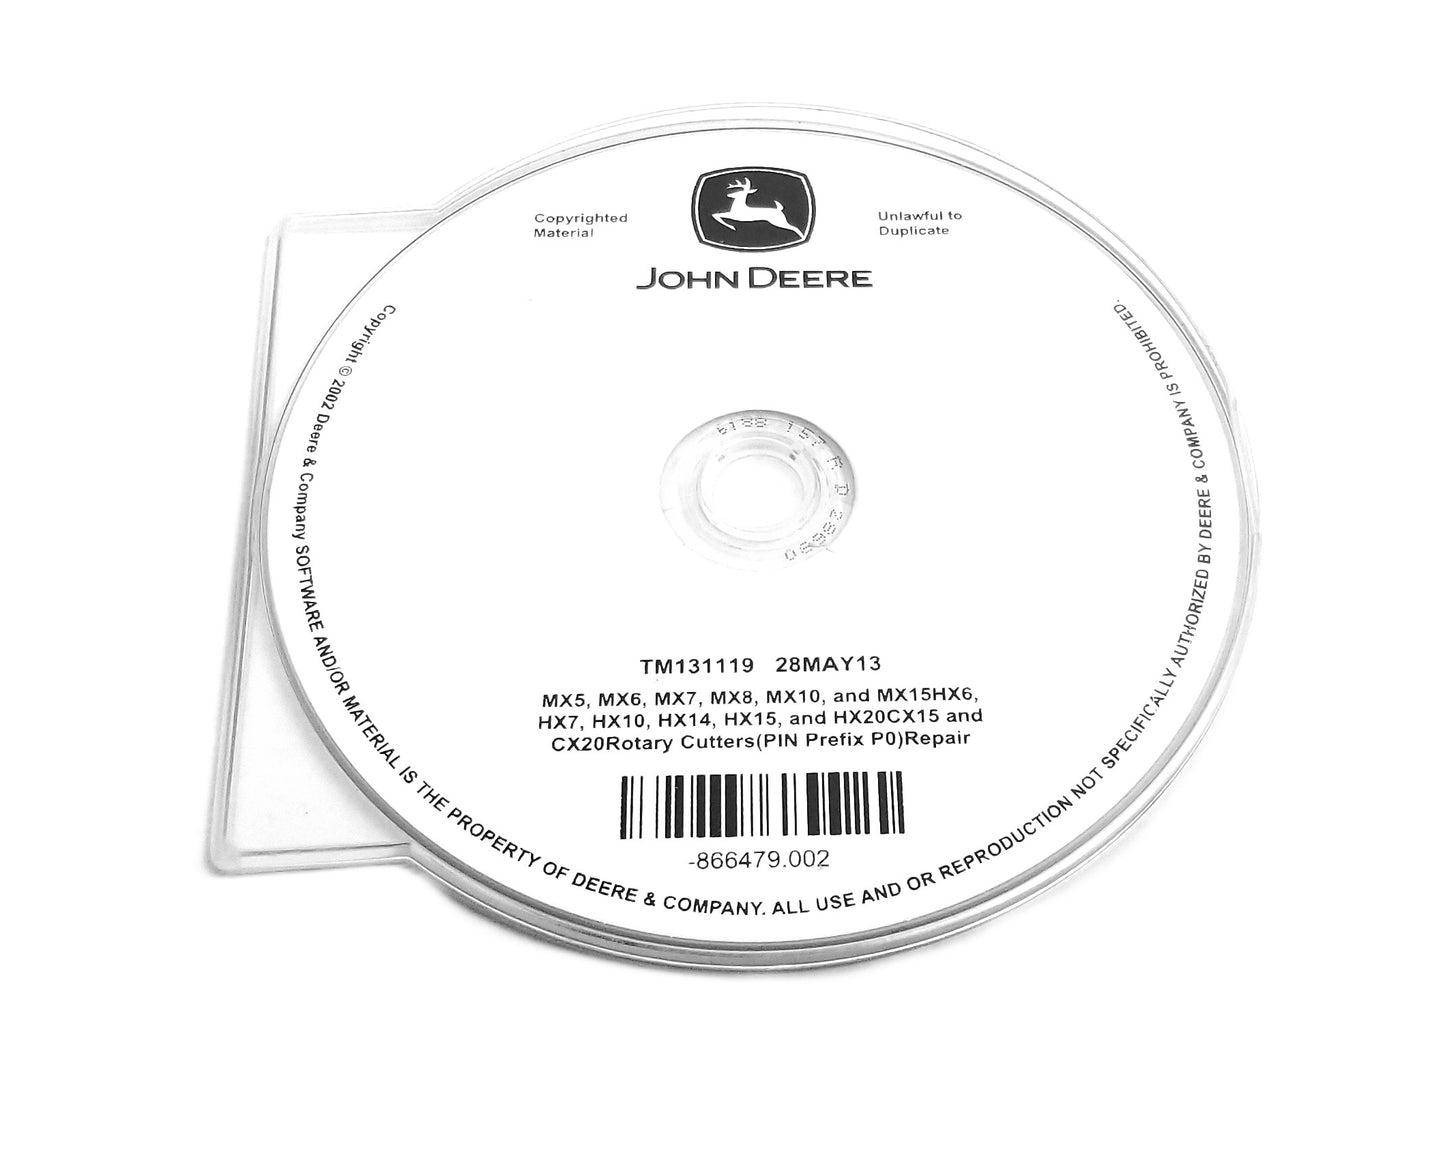 John Deere MX/HX/CX Series Rotary Cutters Technical Manual CD - TM131119CD